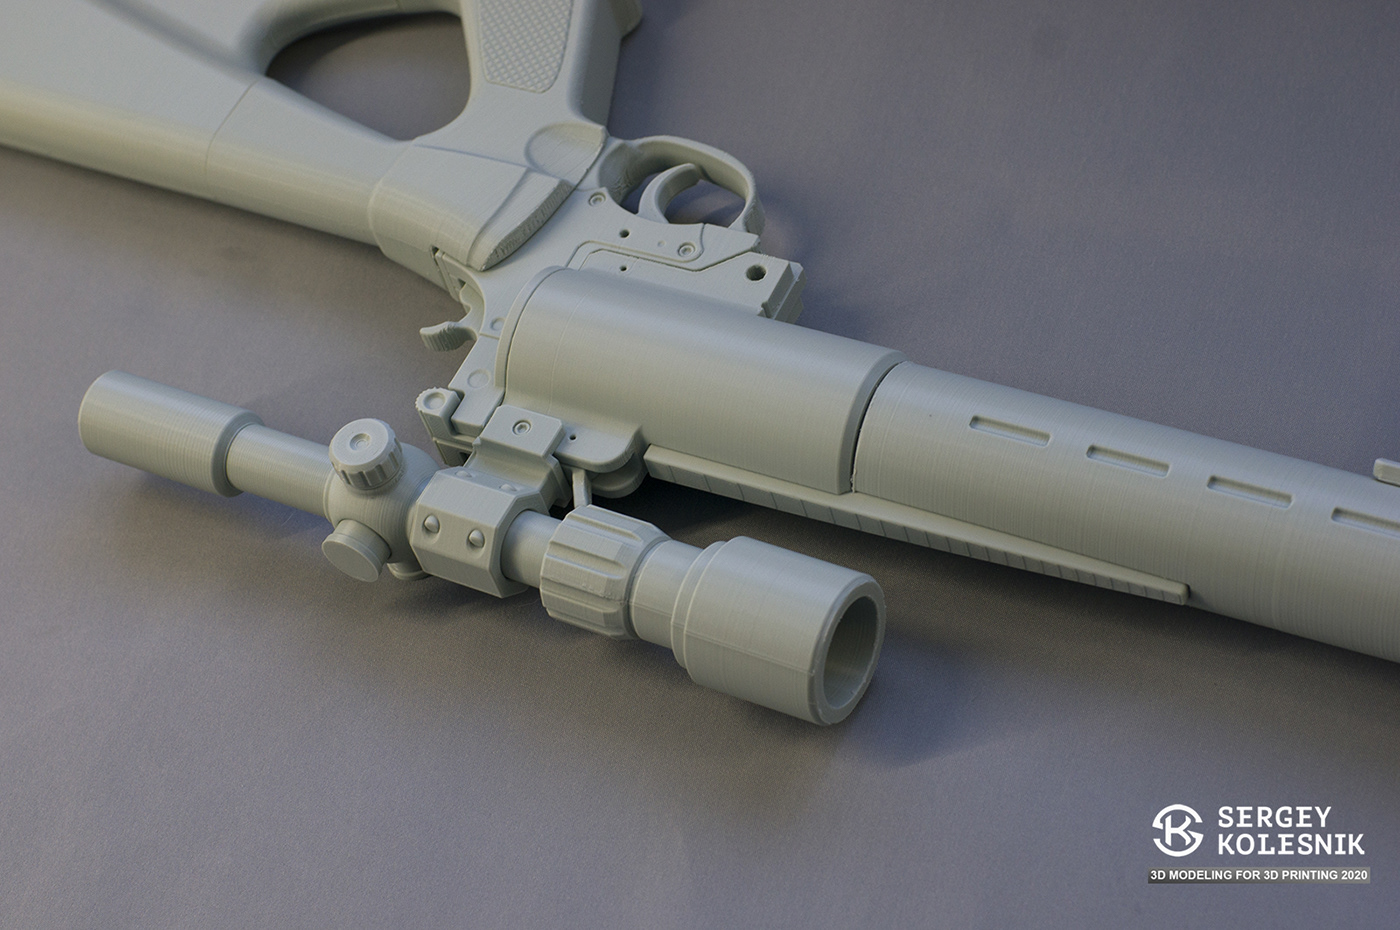 The Mandalorian mandalorian Deathwatch Rifle mando Starwars replica Cosplay scalemodel Blaster